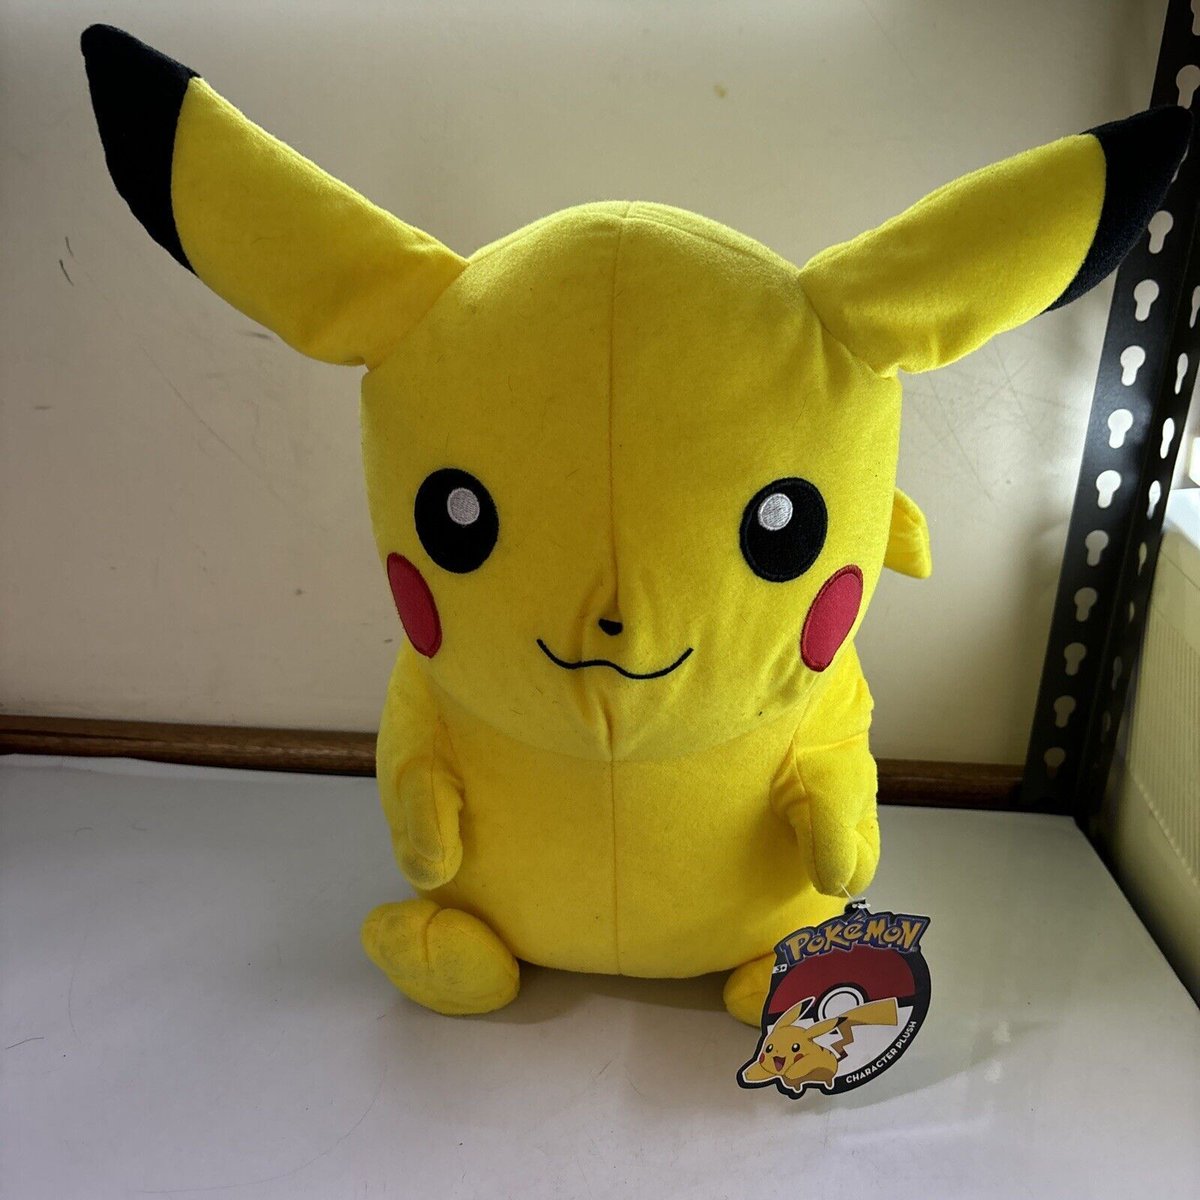 #Pokemon
#Pikachu
#PlushToy
#GiantPlush
#PokemonMerch 
retrounit.com.au/products/pokem…